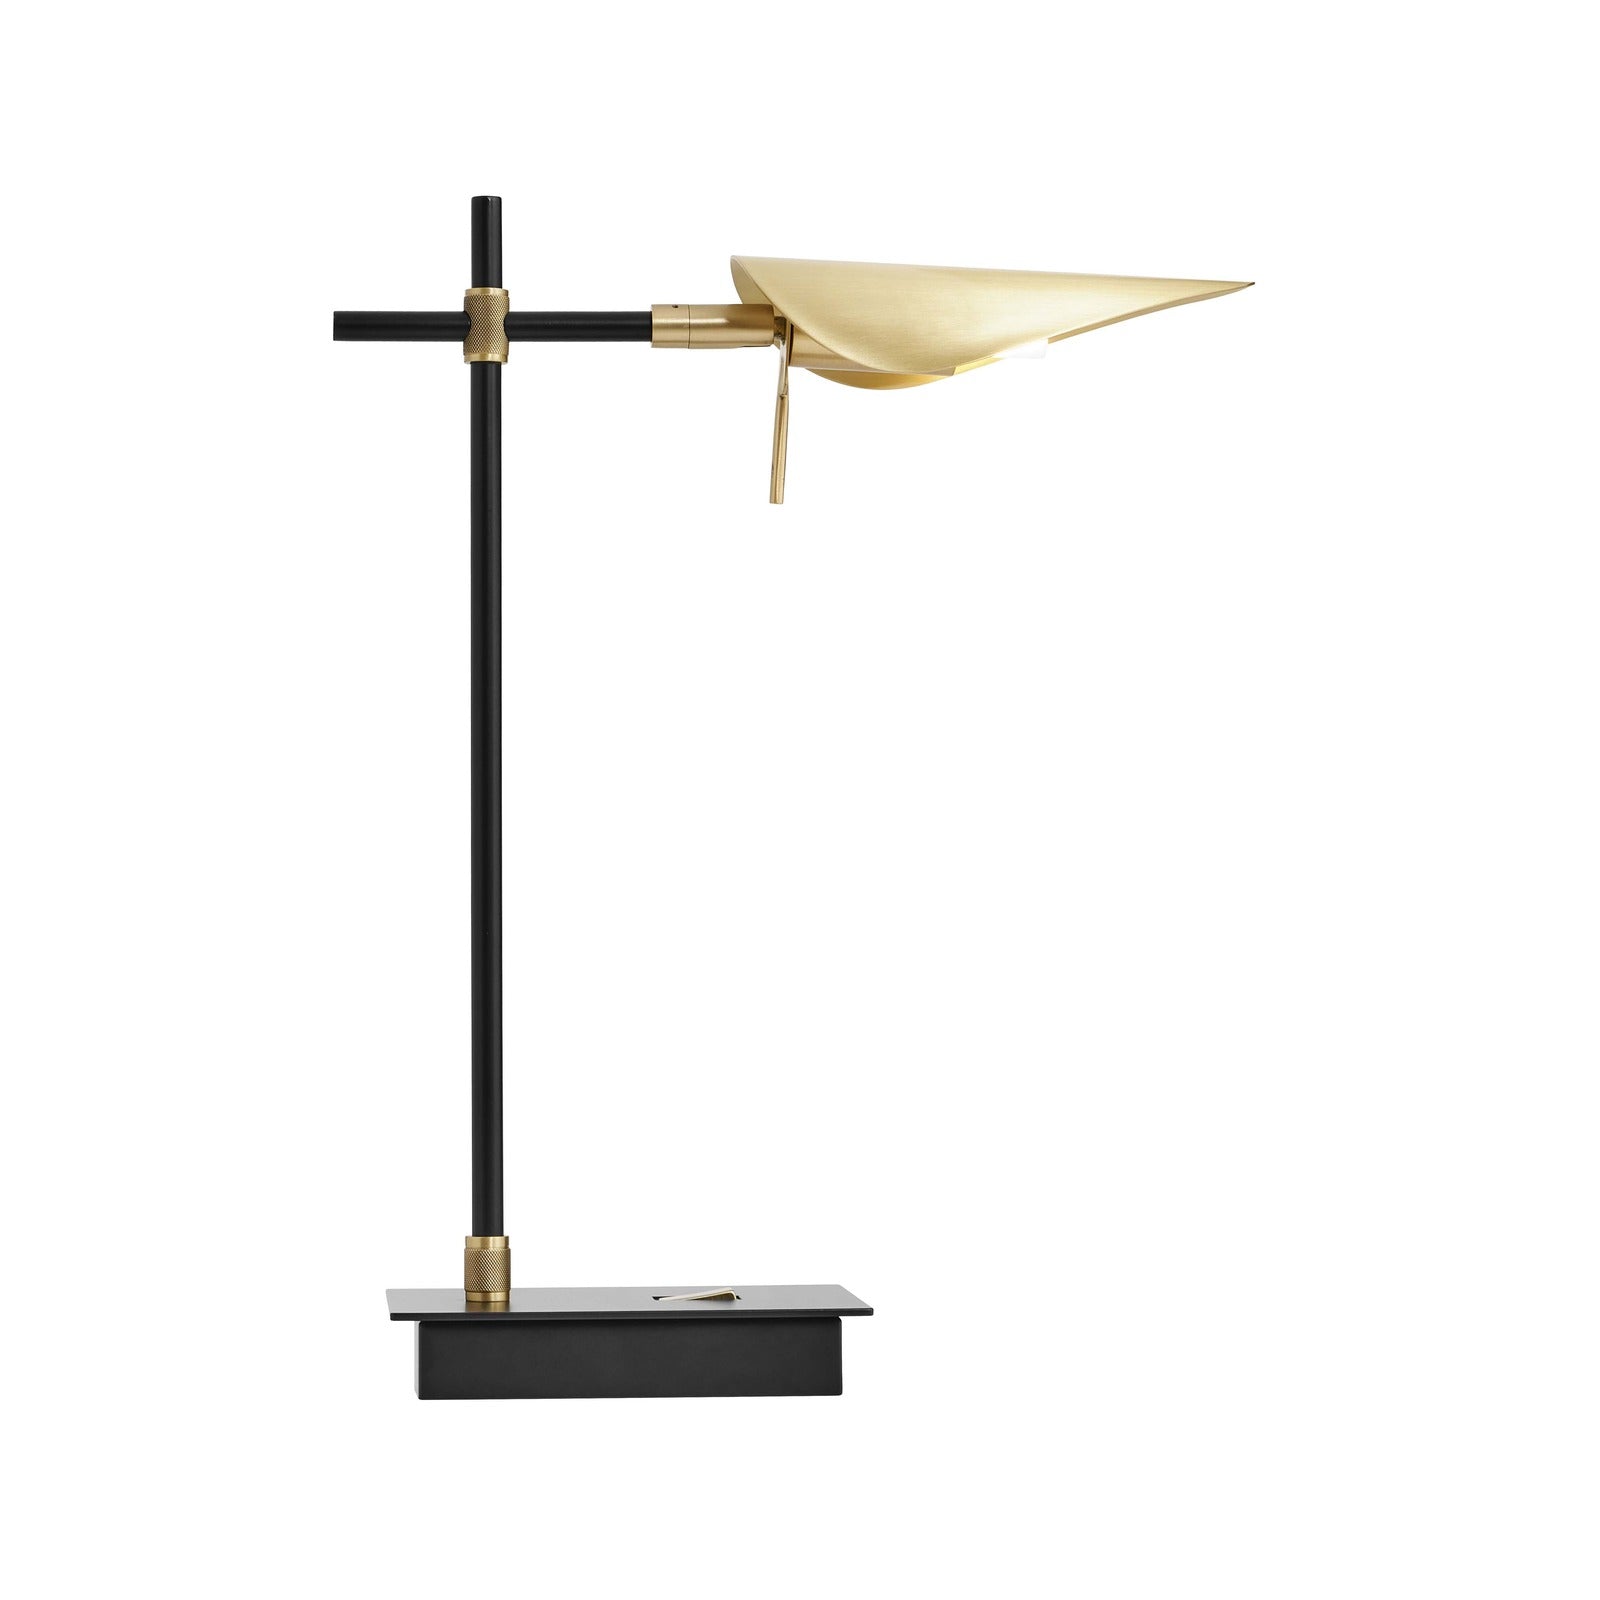 Axl Table Lamp